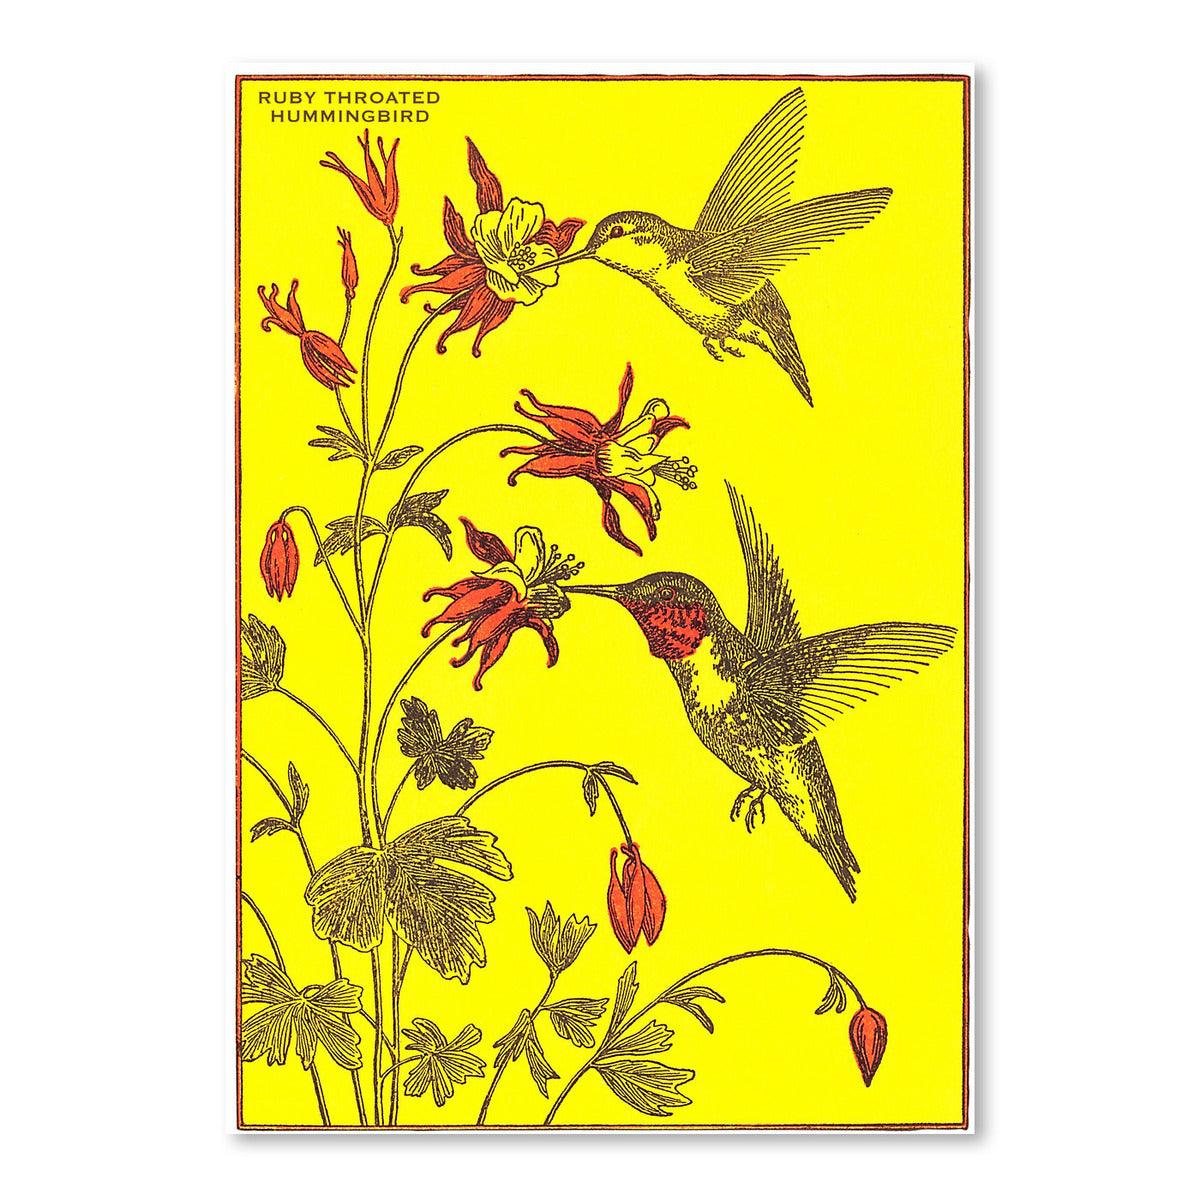 Ruby-Throated Hummingbirds by Found Image Press Art Print - Art Print - Americanflat